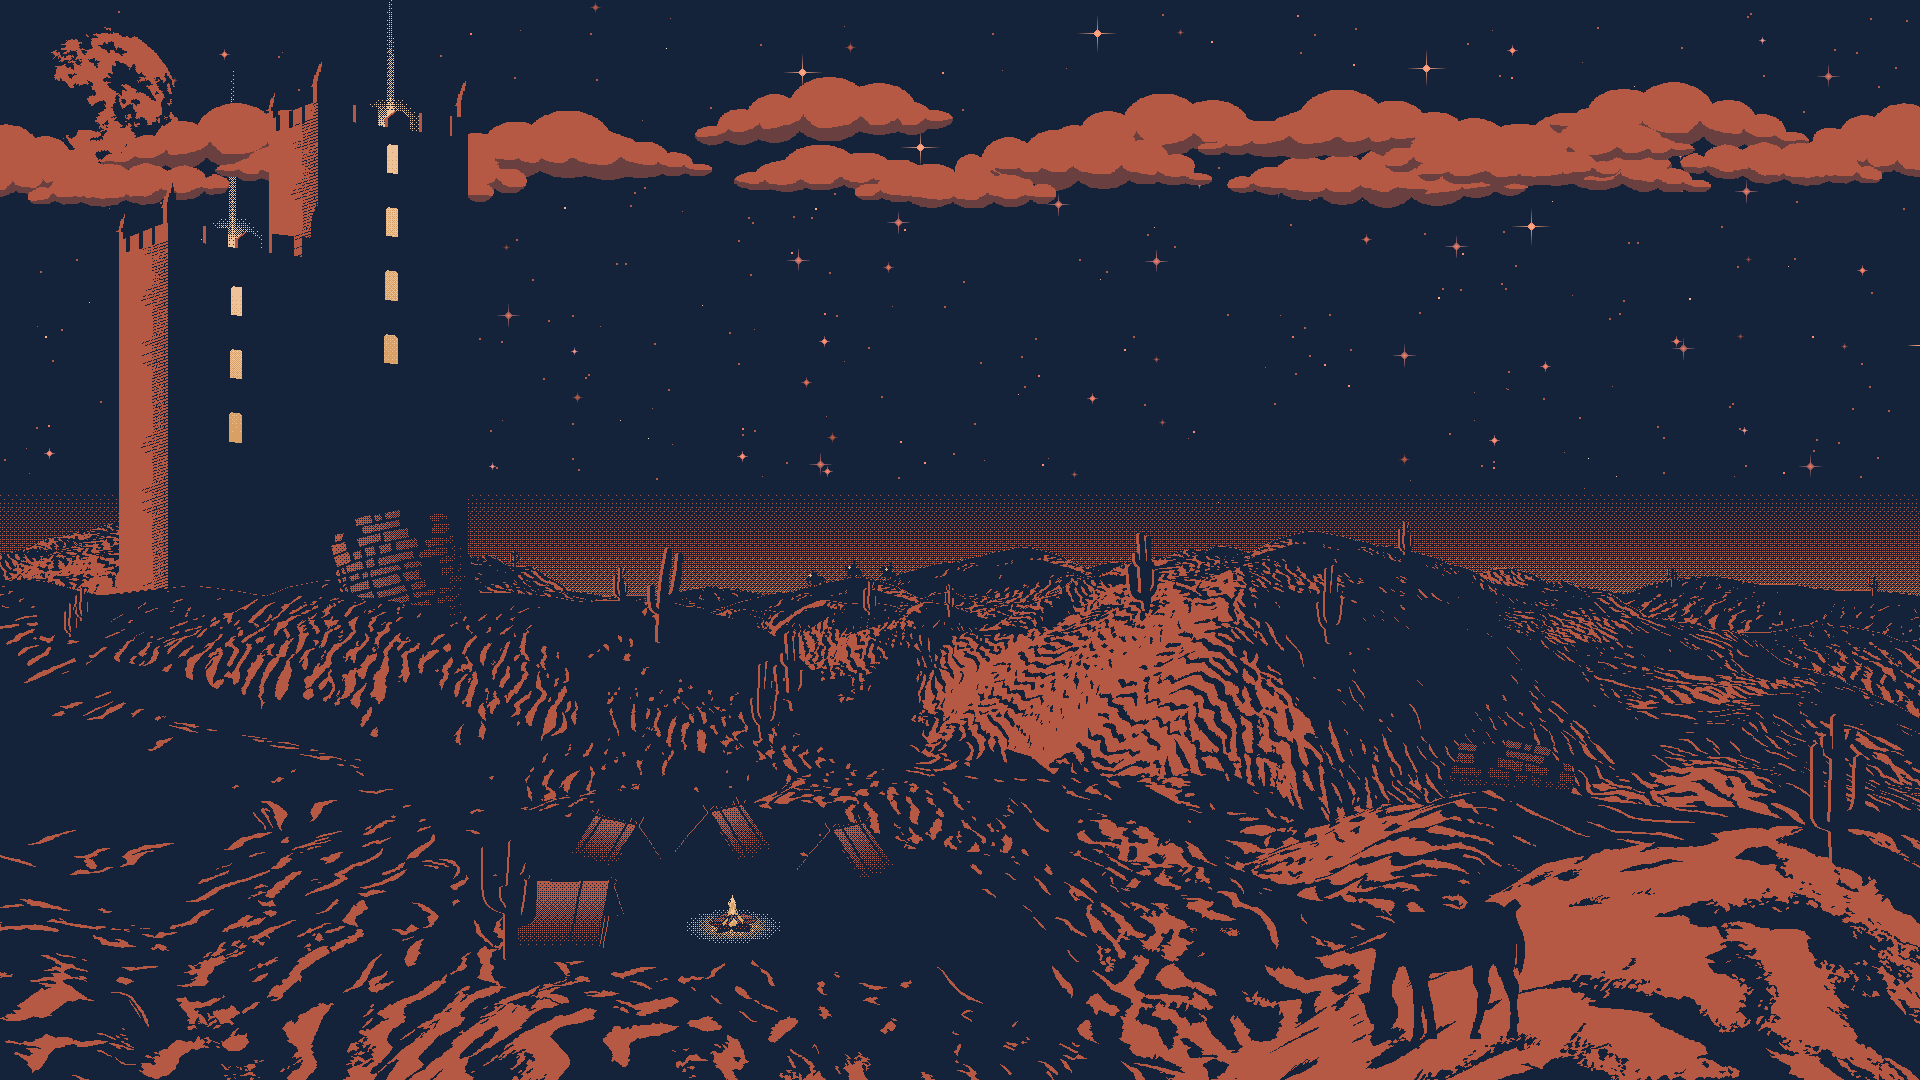 Digital Pixel Art Stars Clouds Desert Tower Cactus 1920x1080